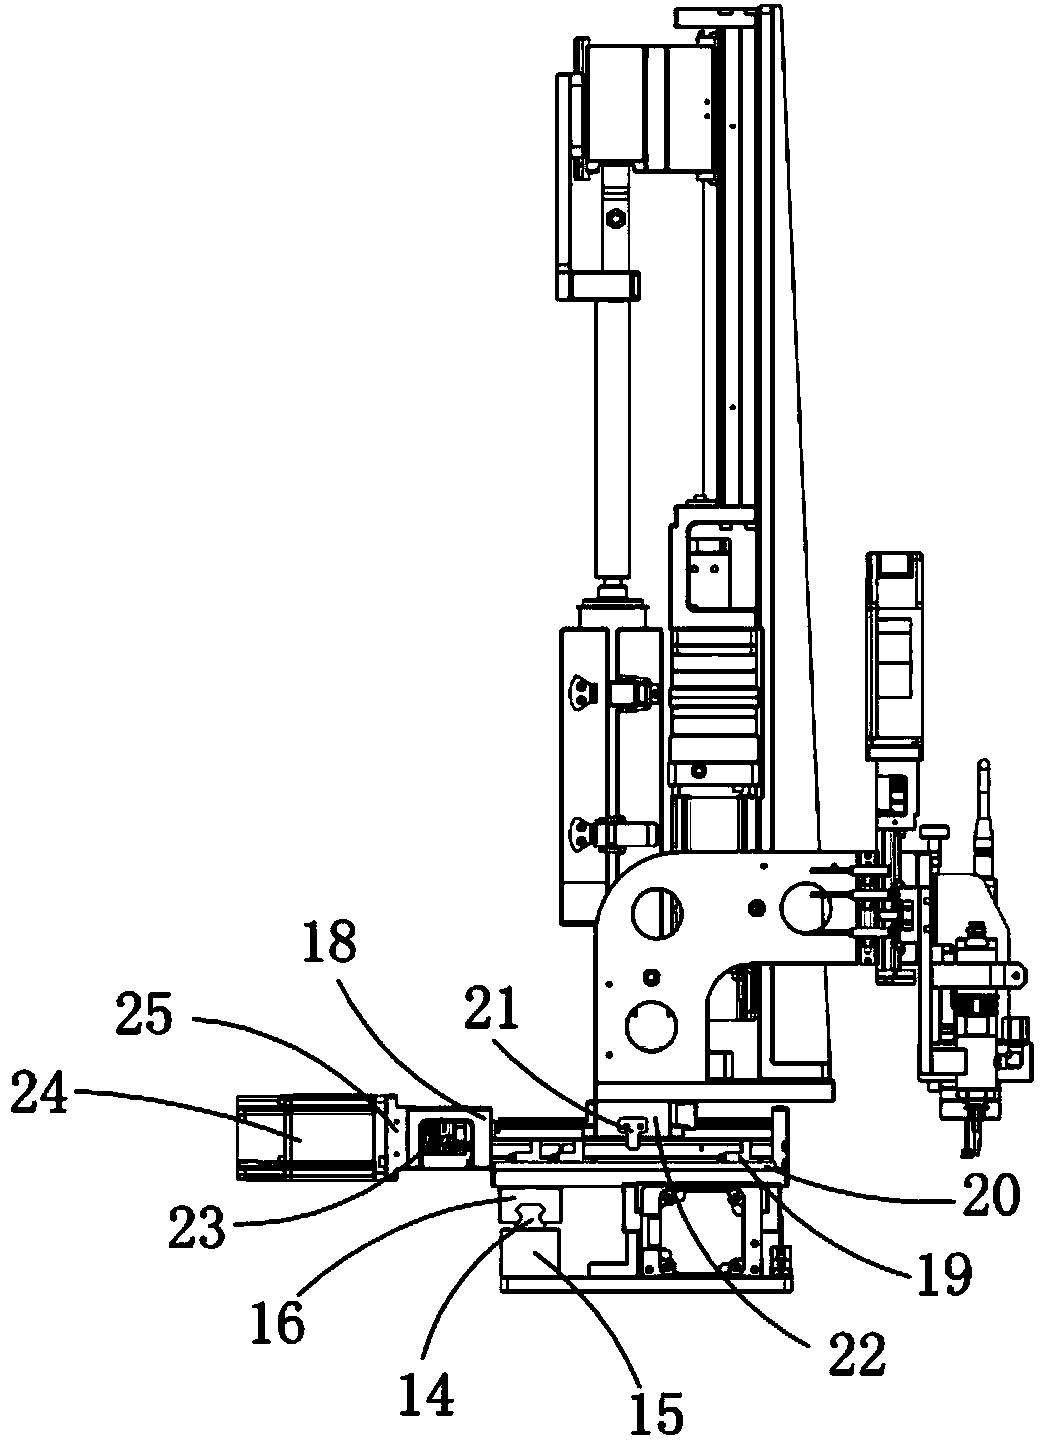 Full-automatic quantitative glue dispensing mechanism